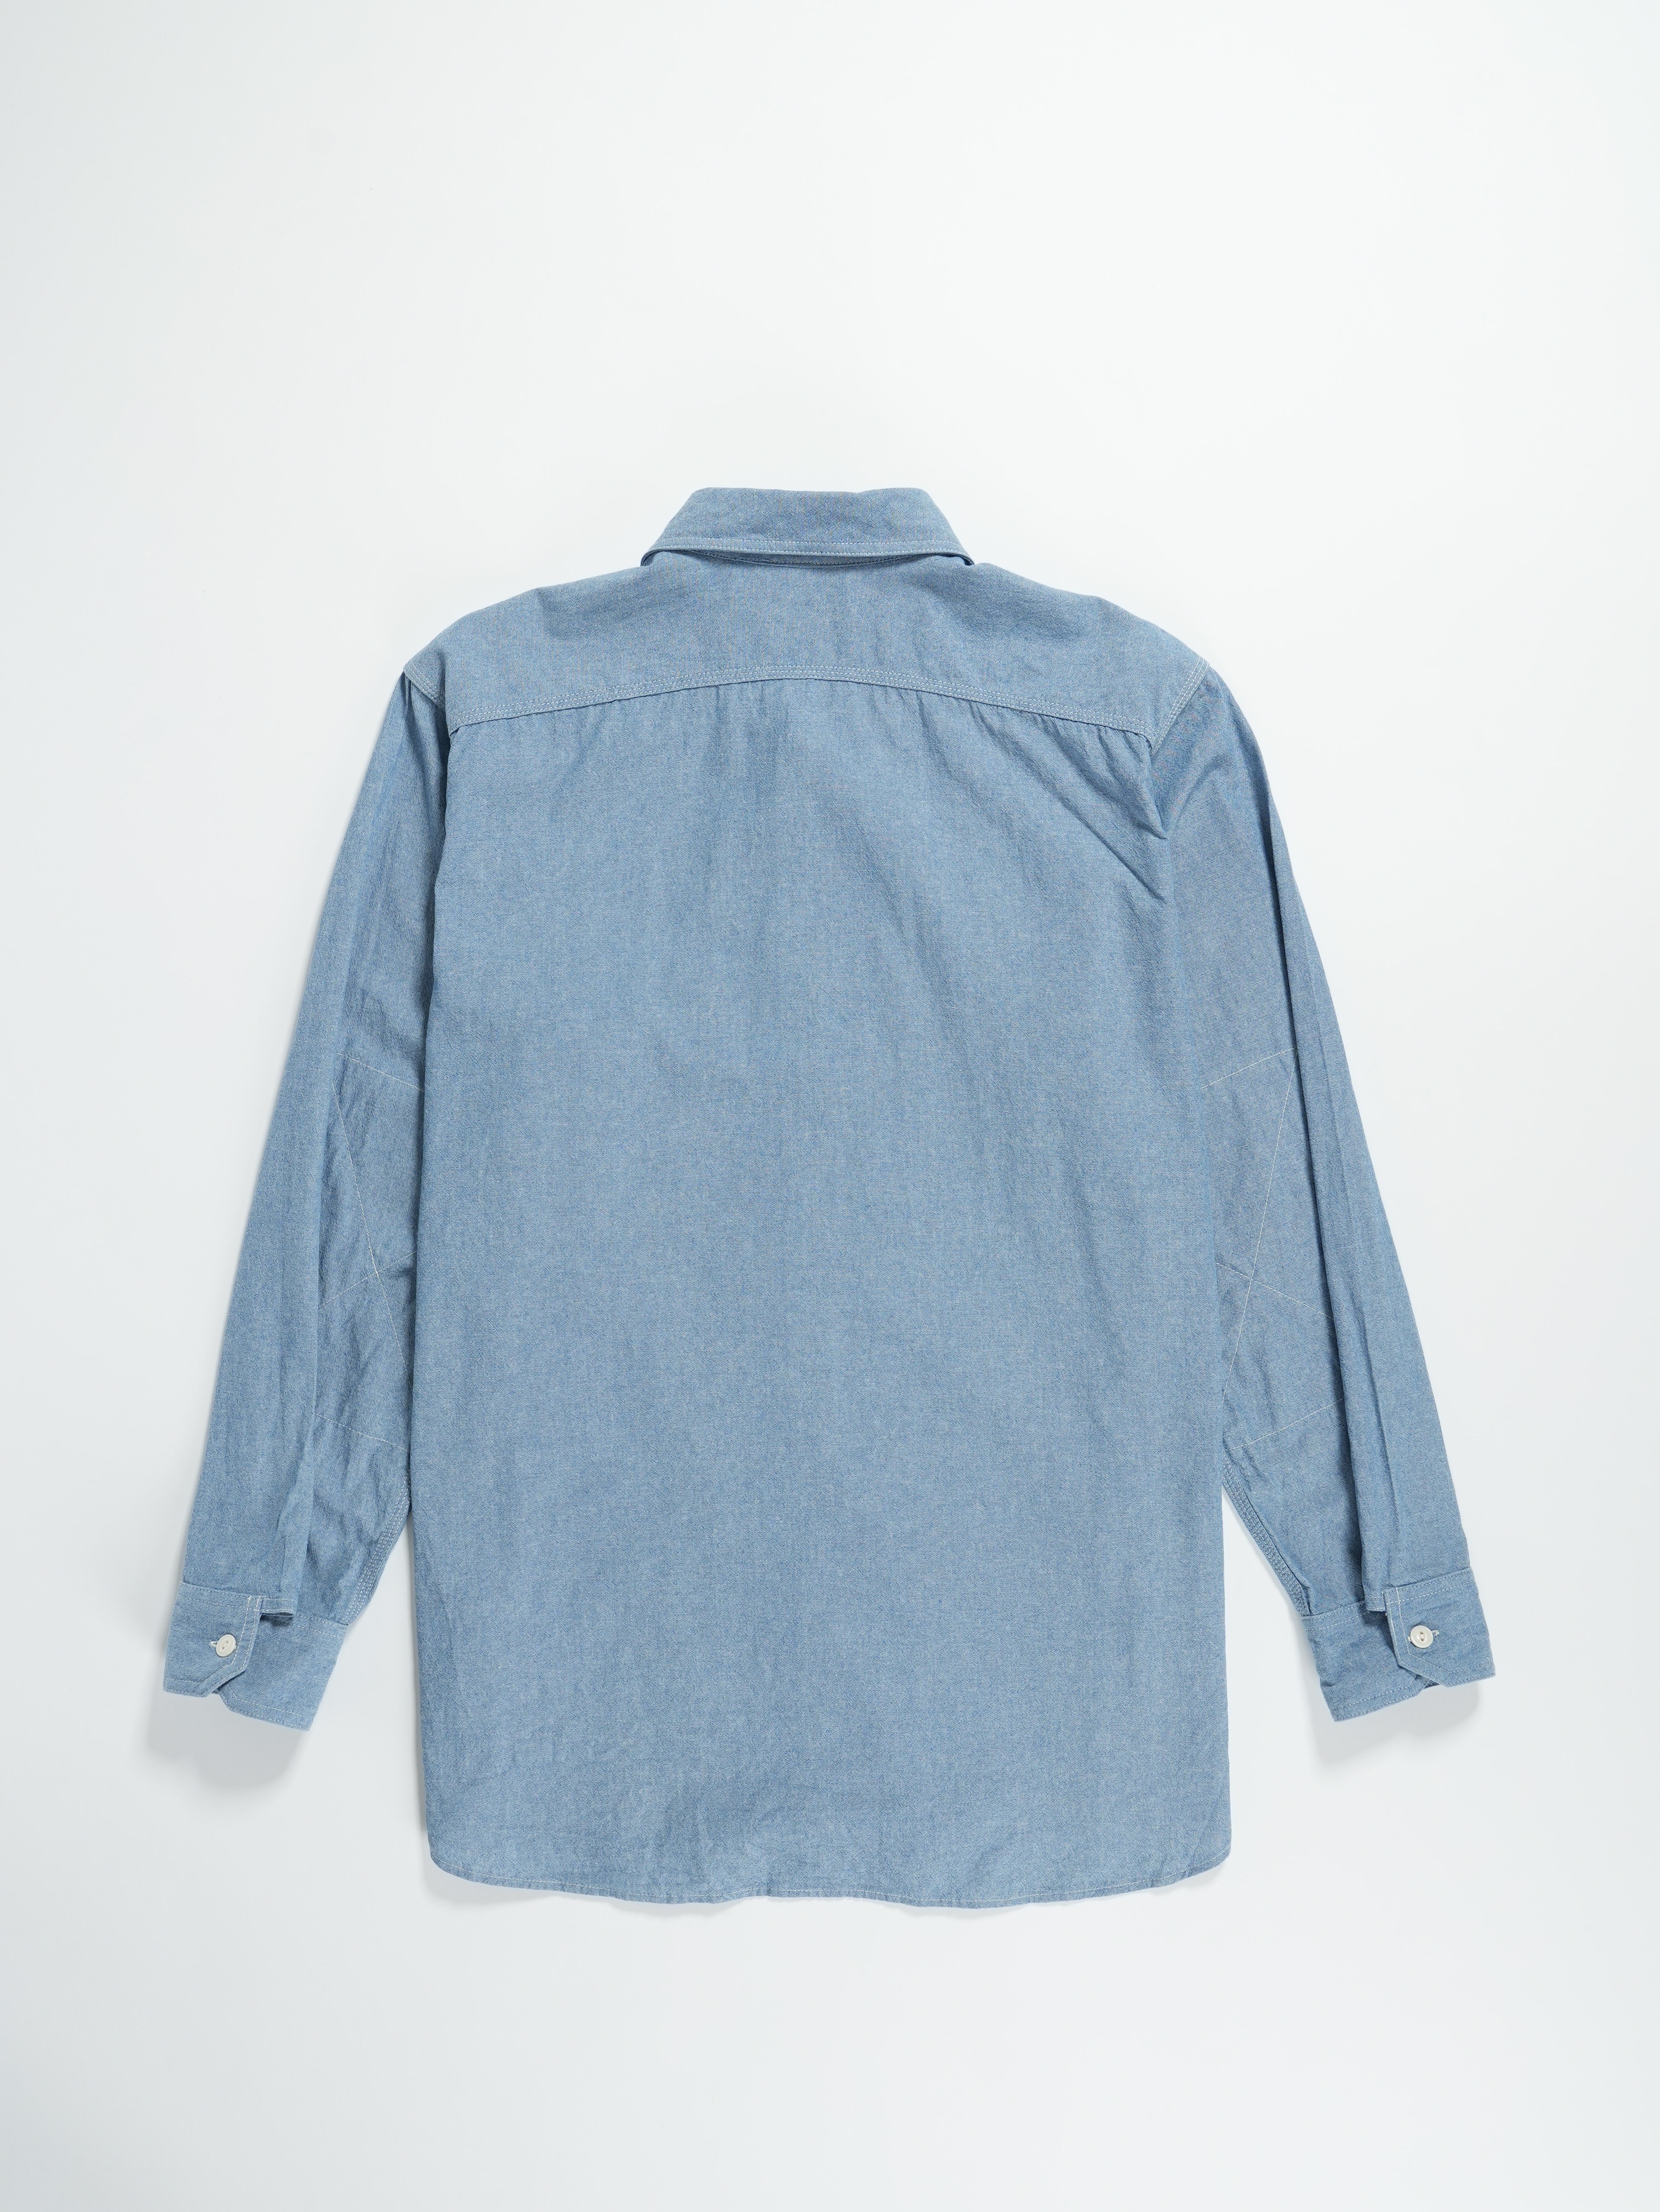 Work Shirt - Lt. Blue 4.5oz Cotton Chambray